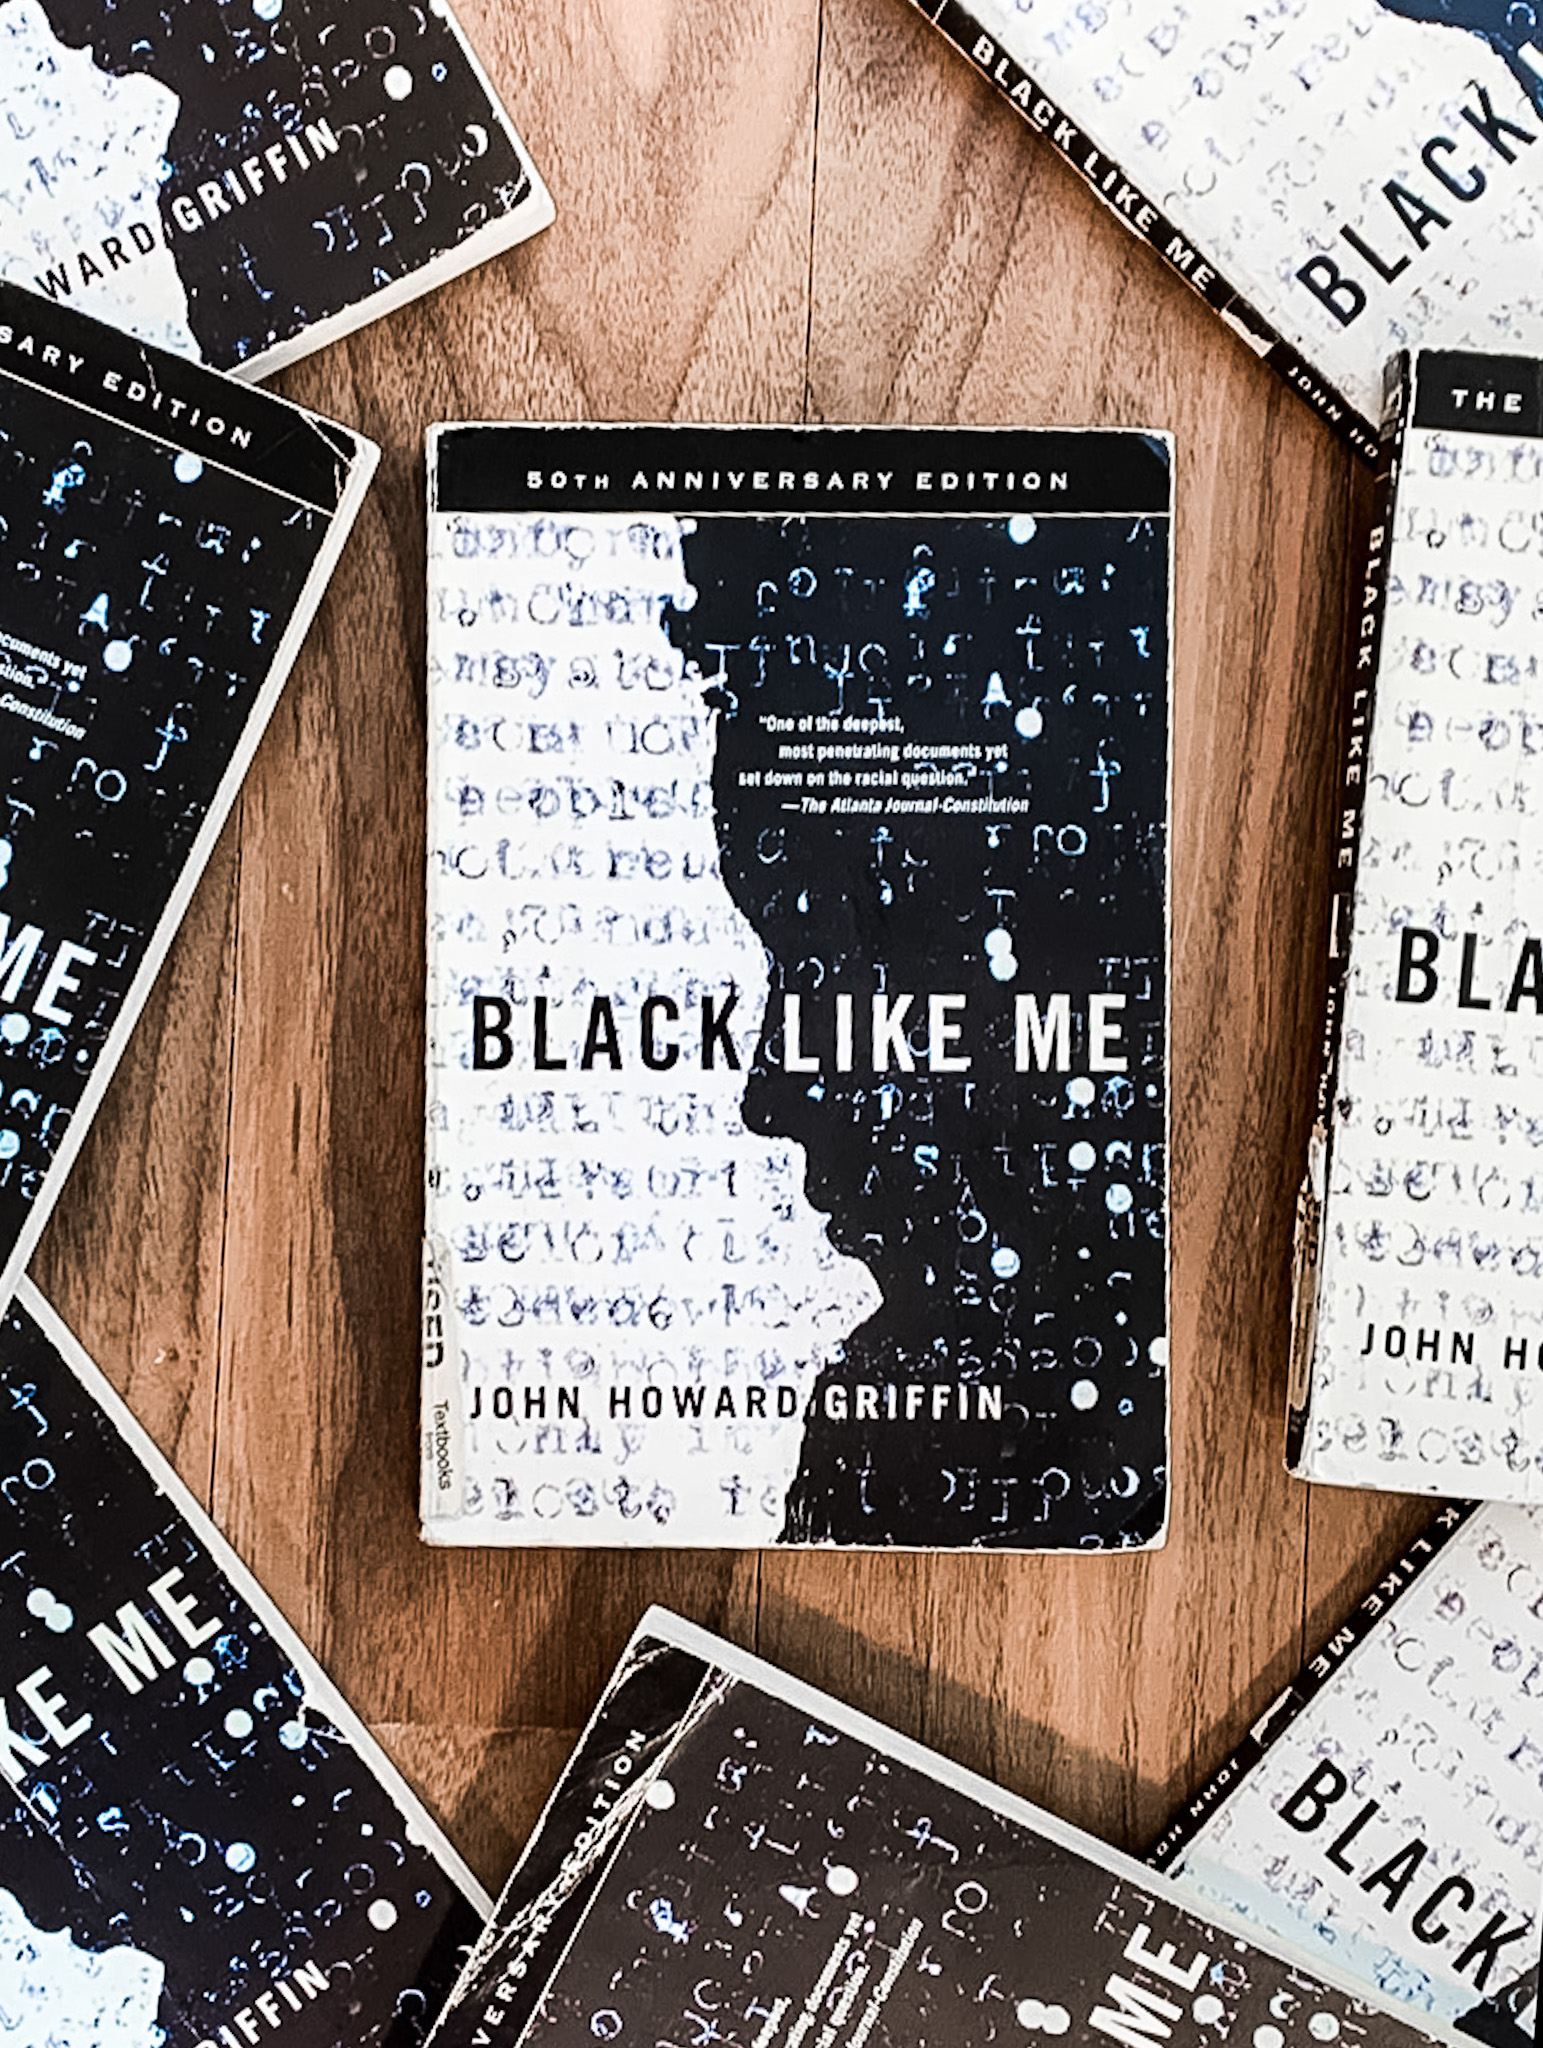 Book Review: Black Chalk – Milam's Musings